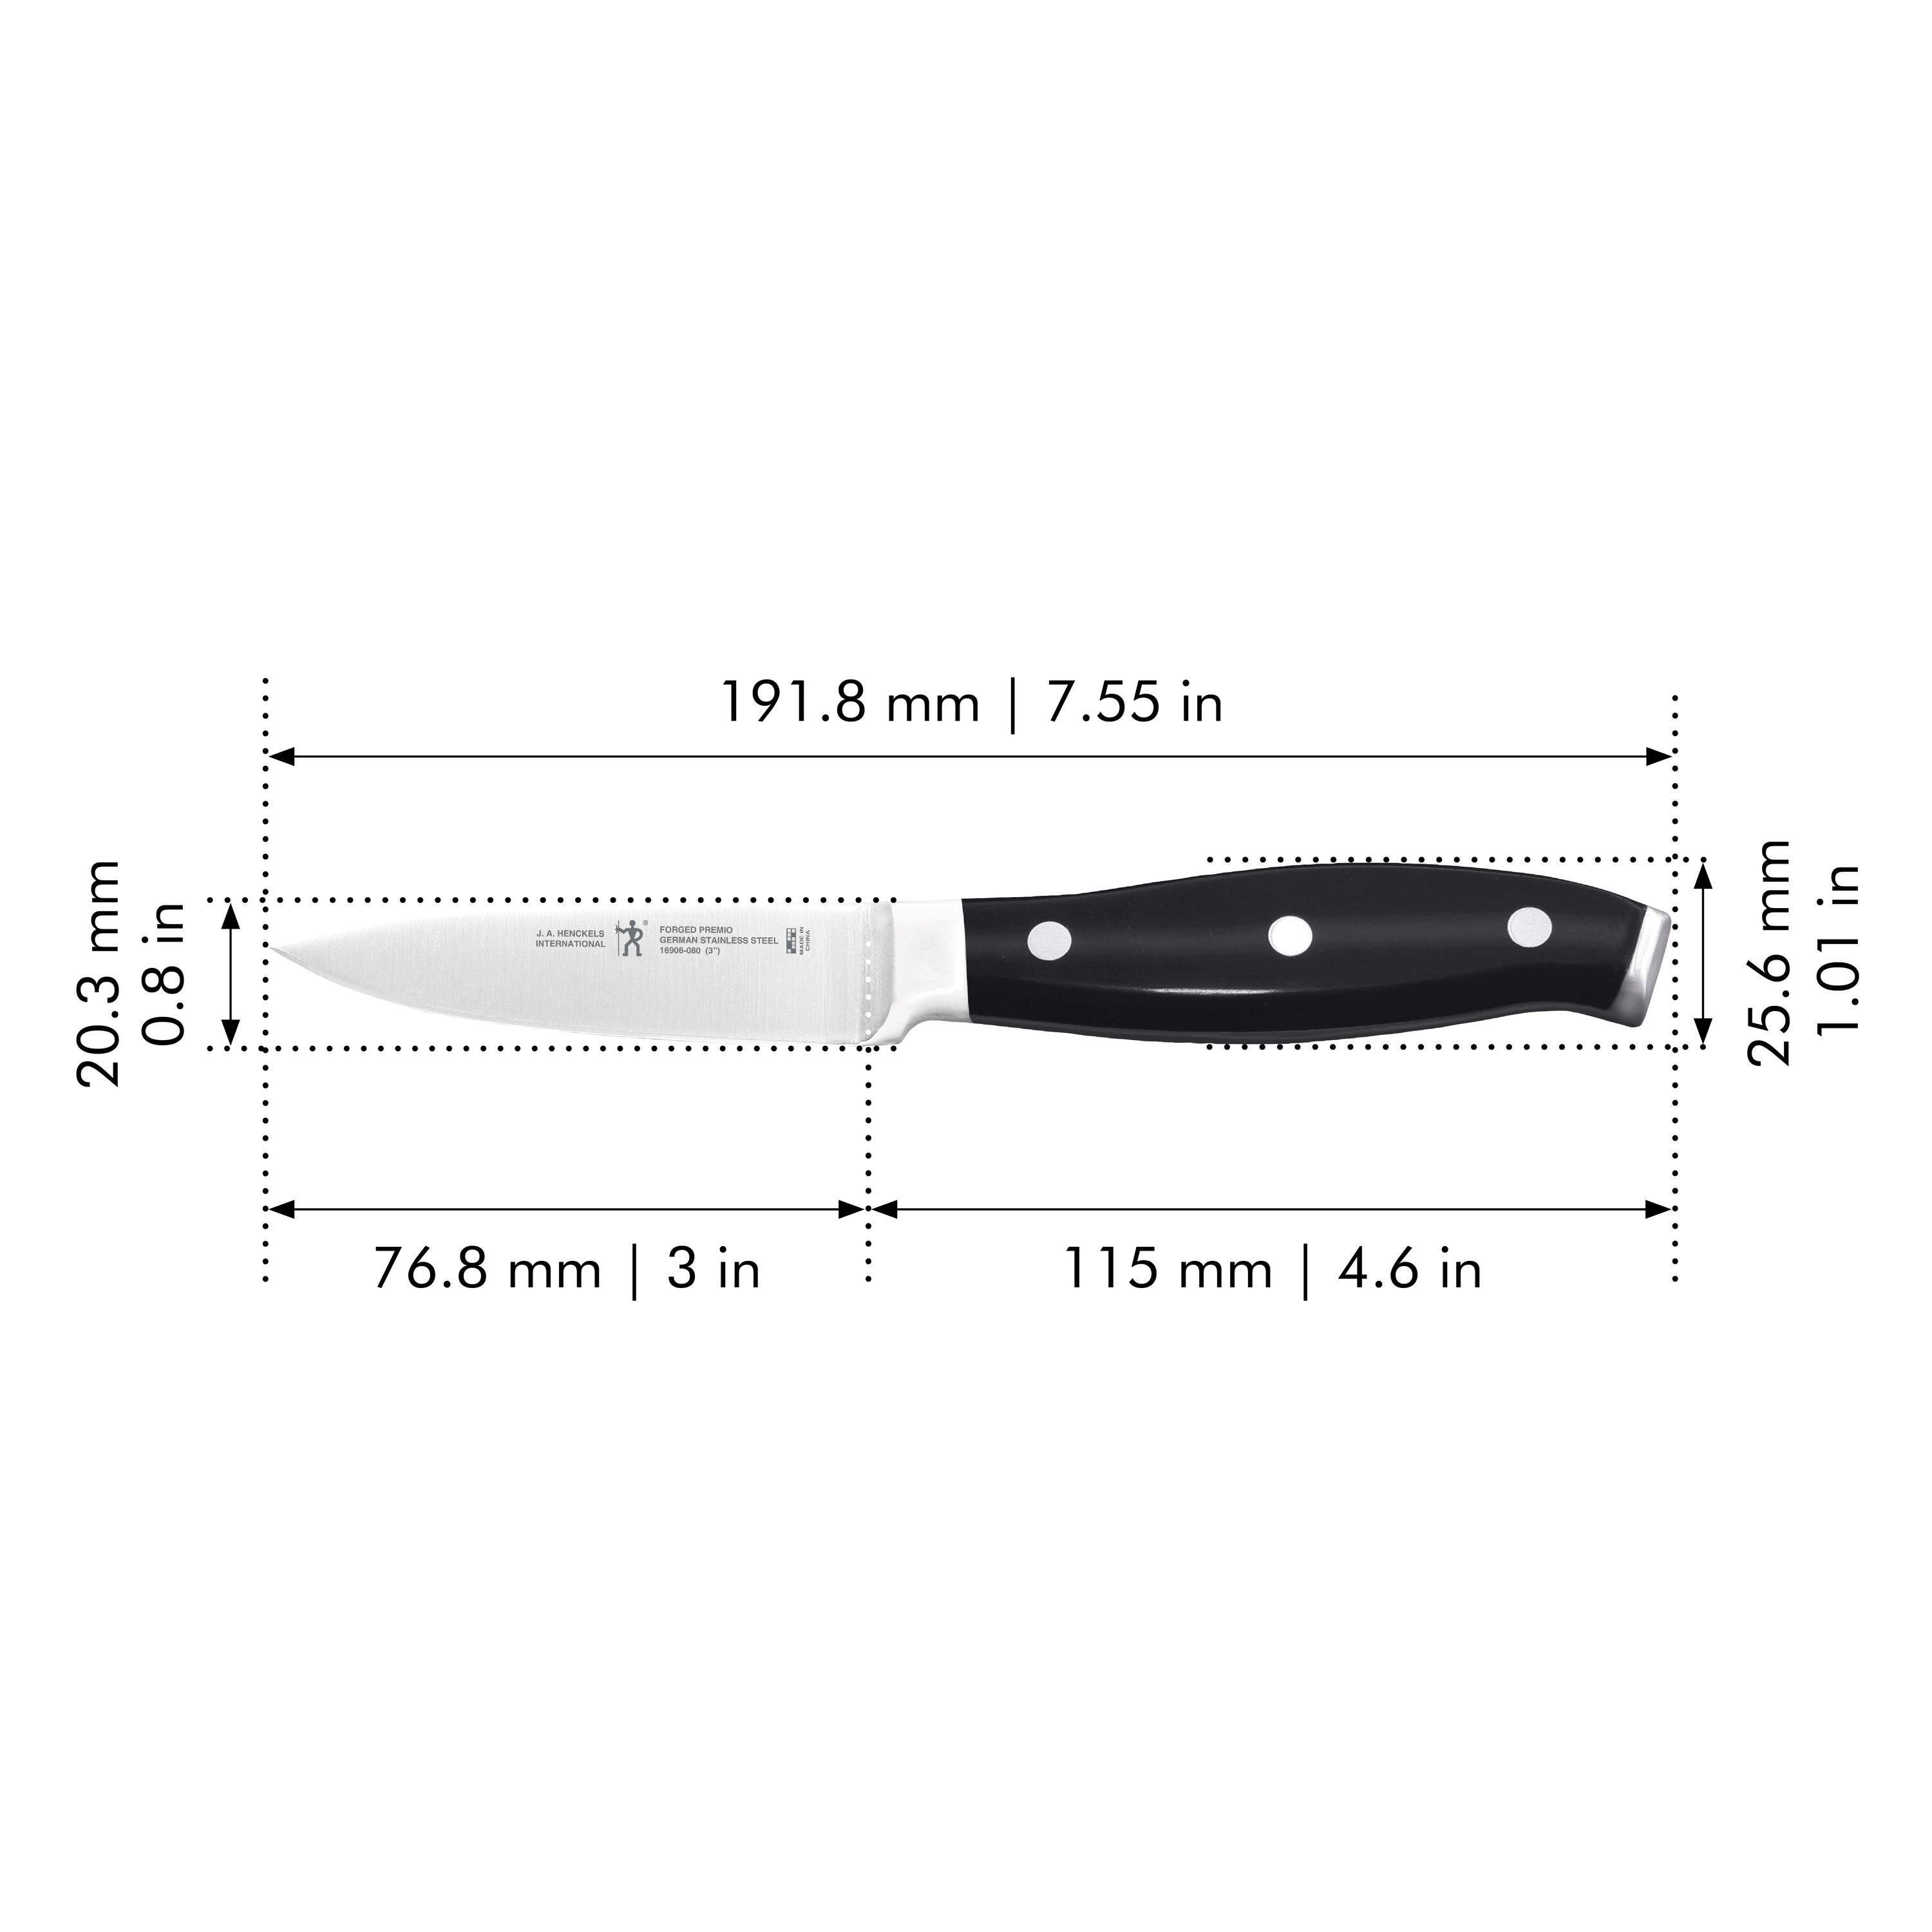 JA Henckel Forged Premio 3 Paring Knife 16900-081